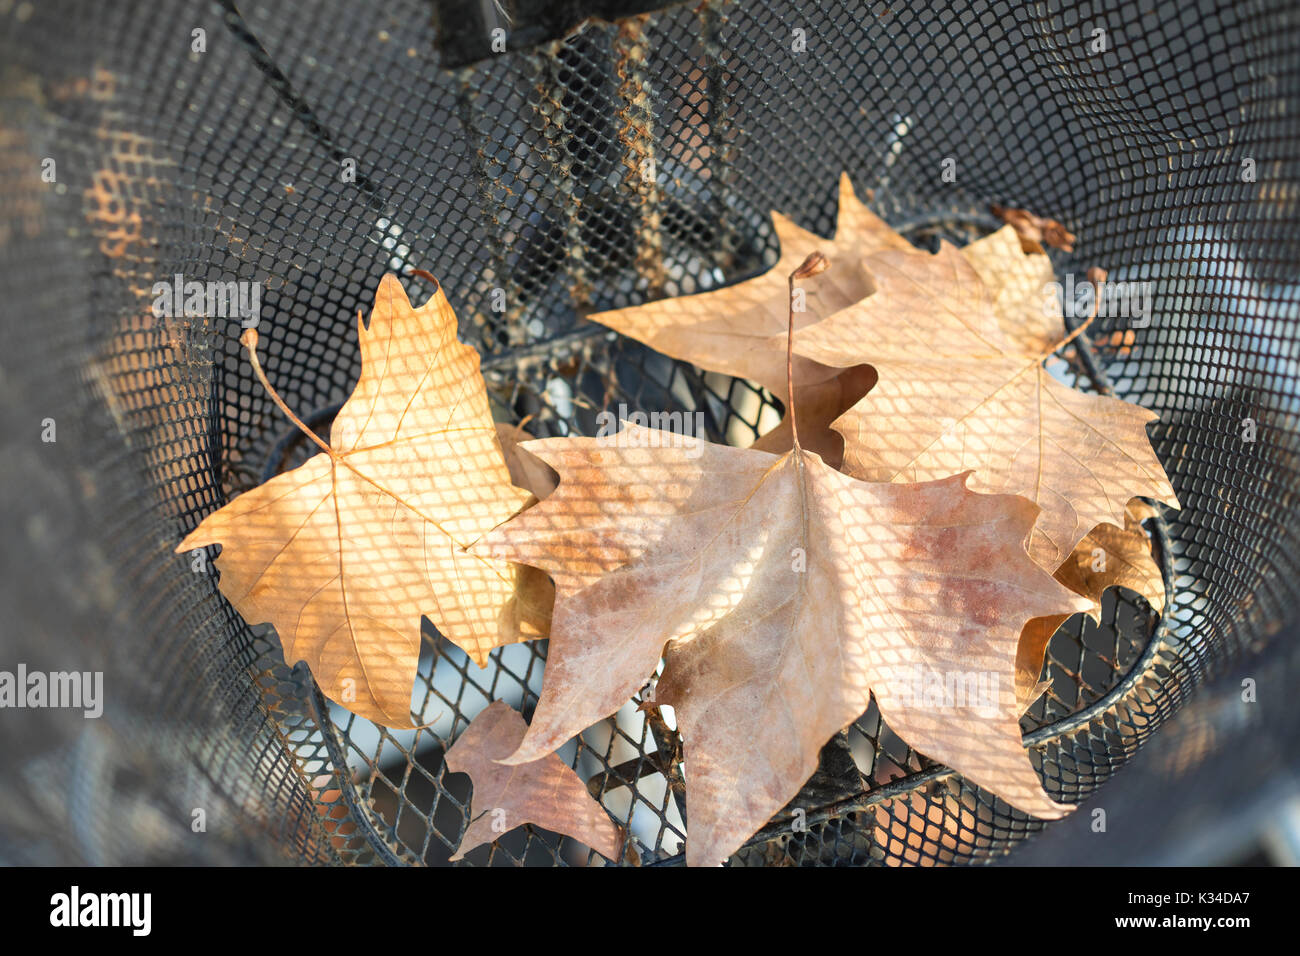 Herbst getrocknete Blätter in ein Fahrrad Korb. Stockfoto